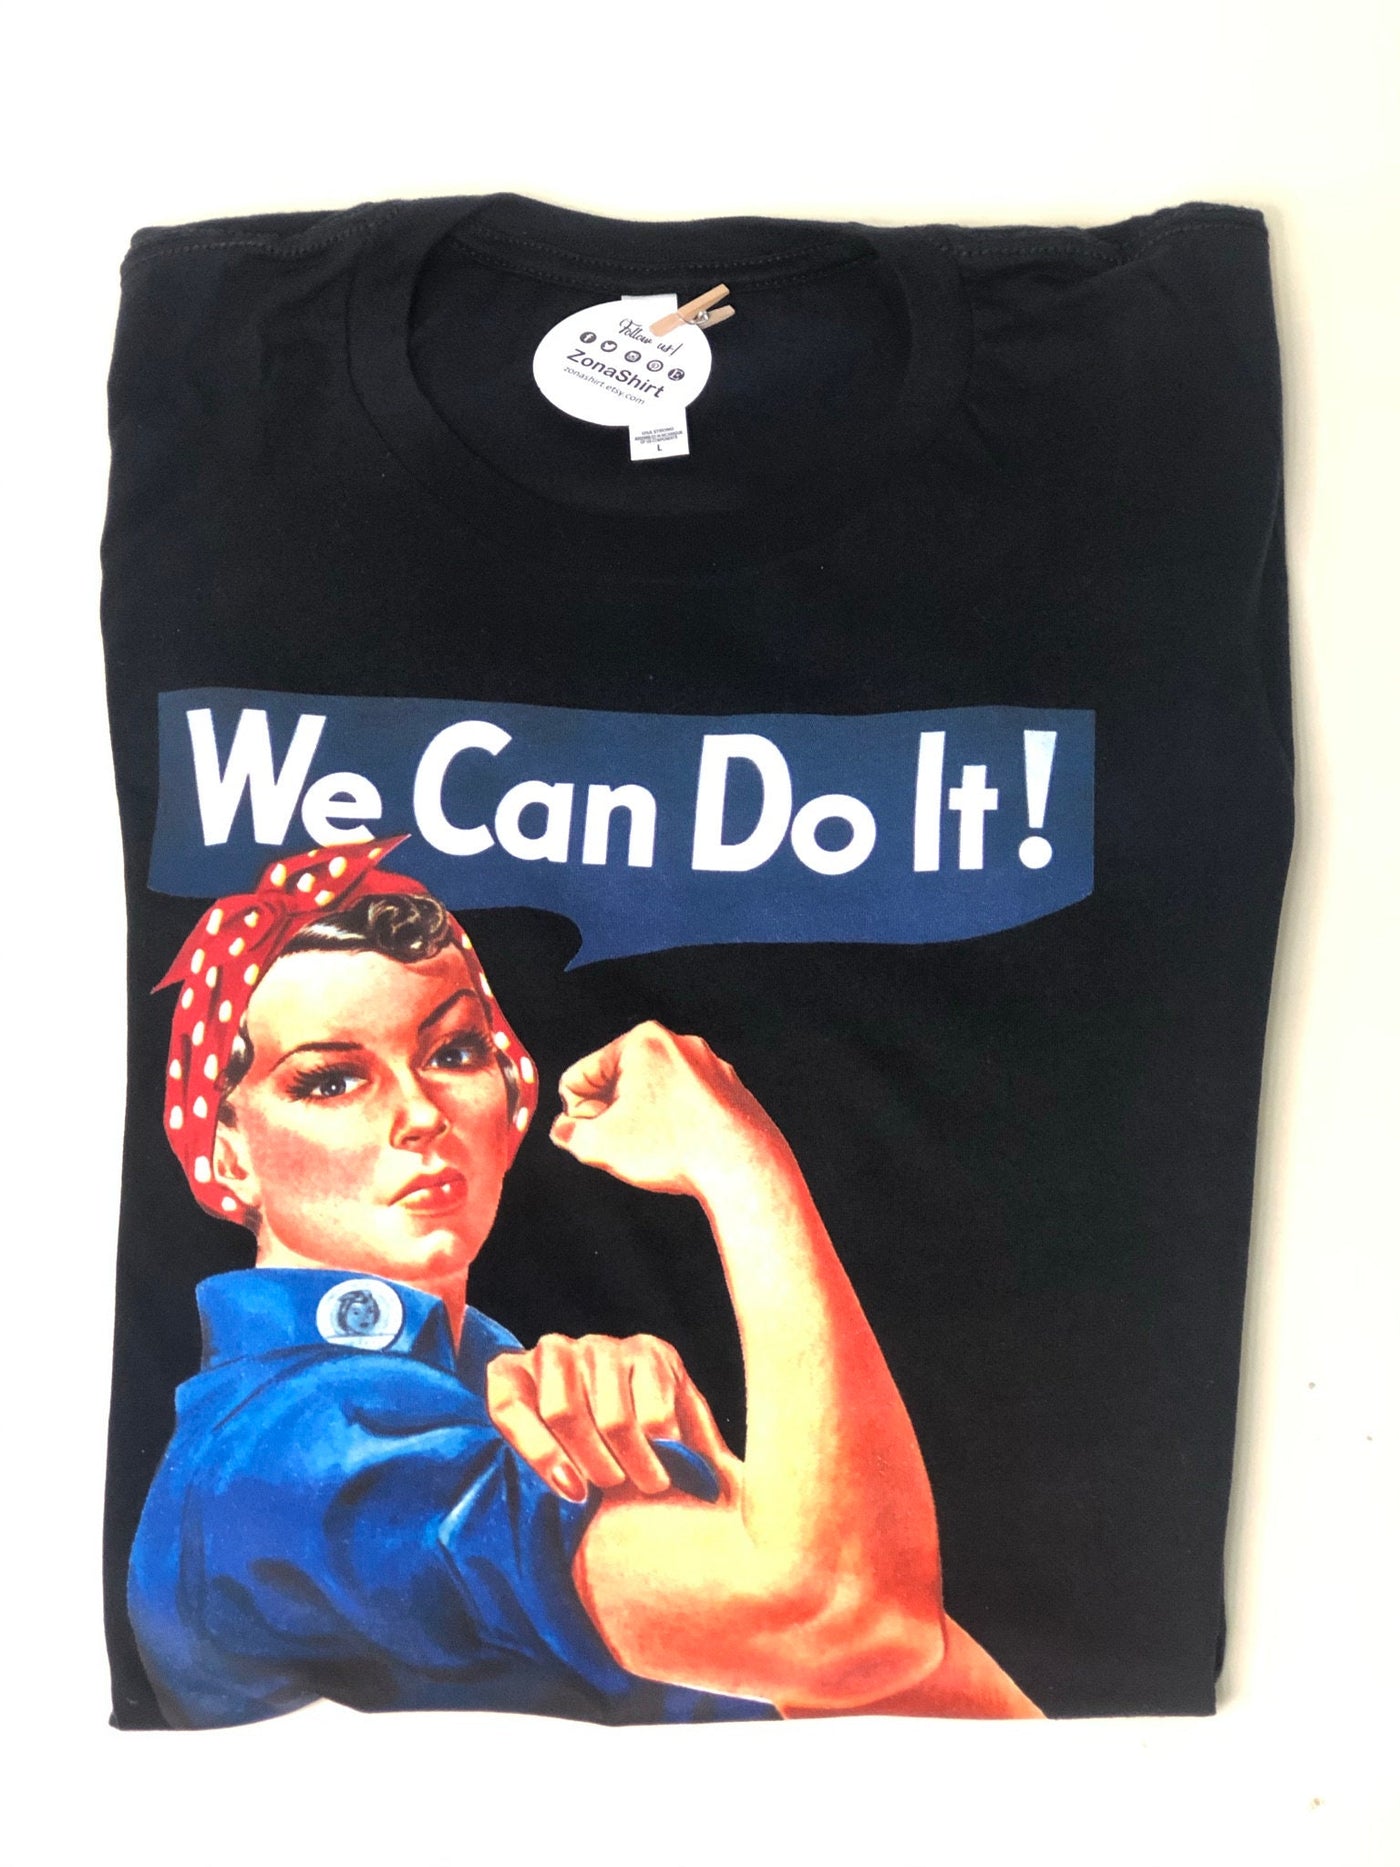 Camiseta We Can Do It!